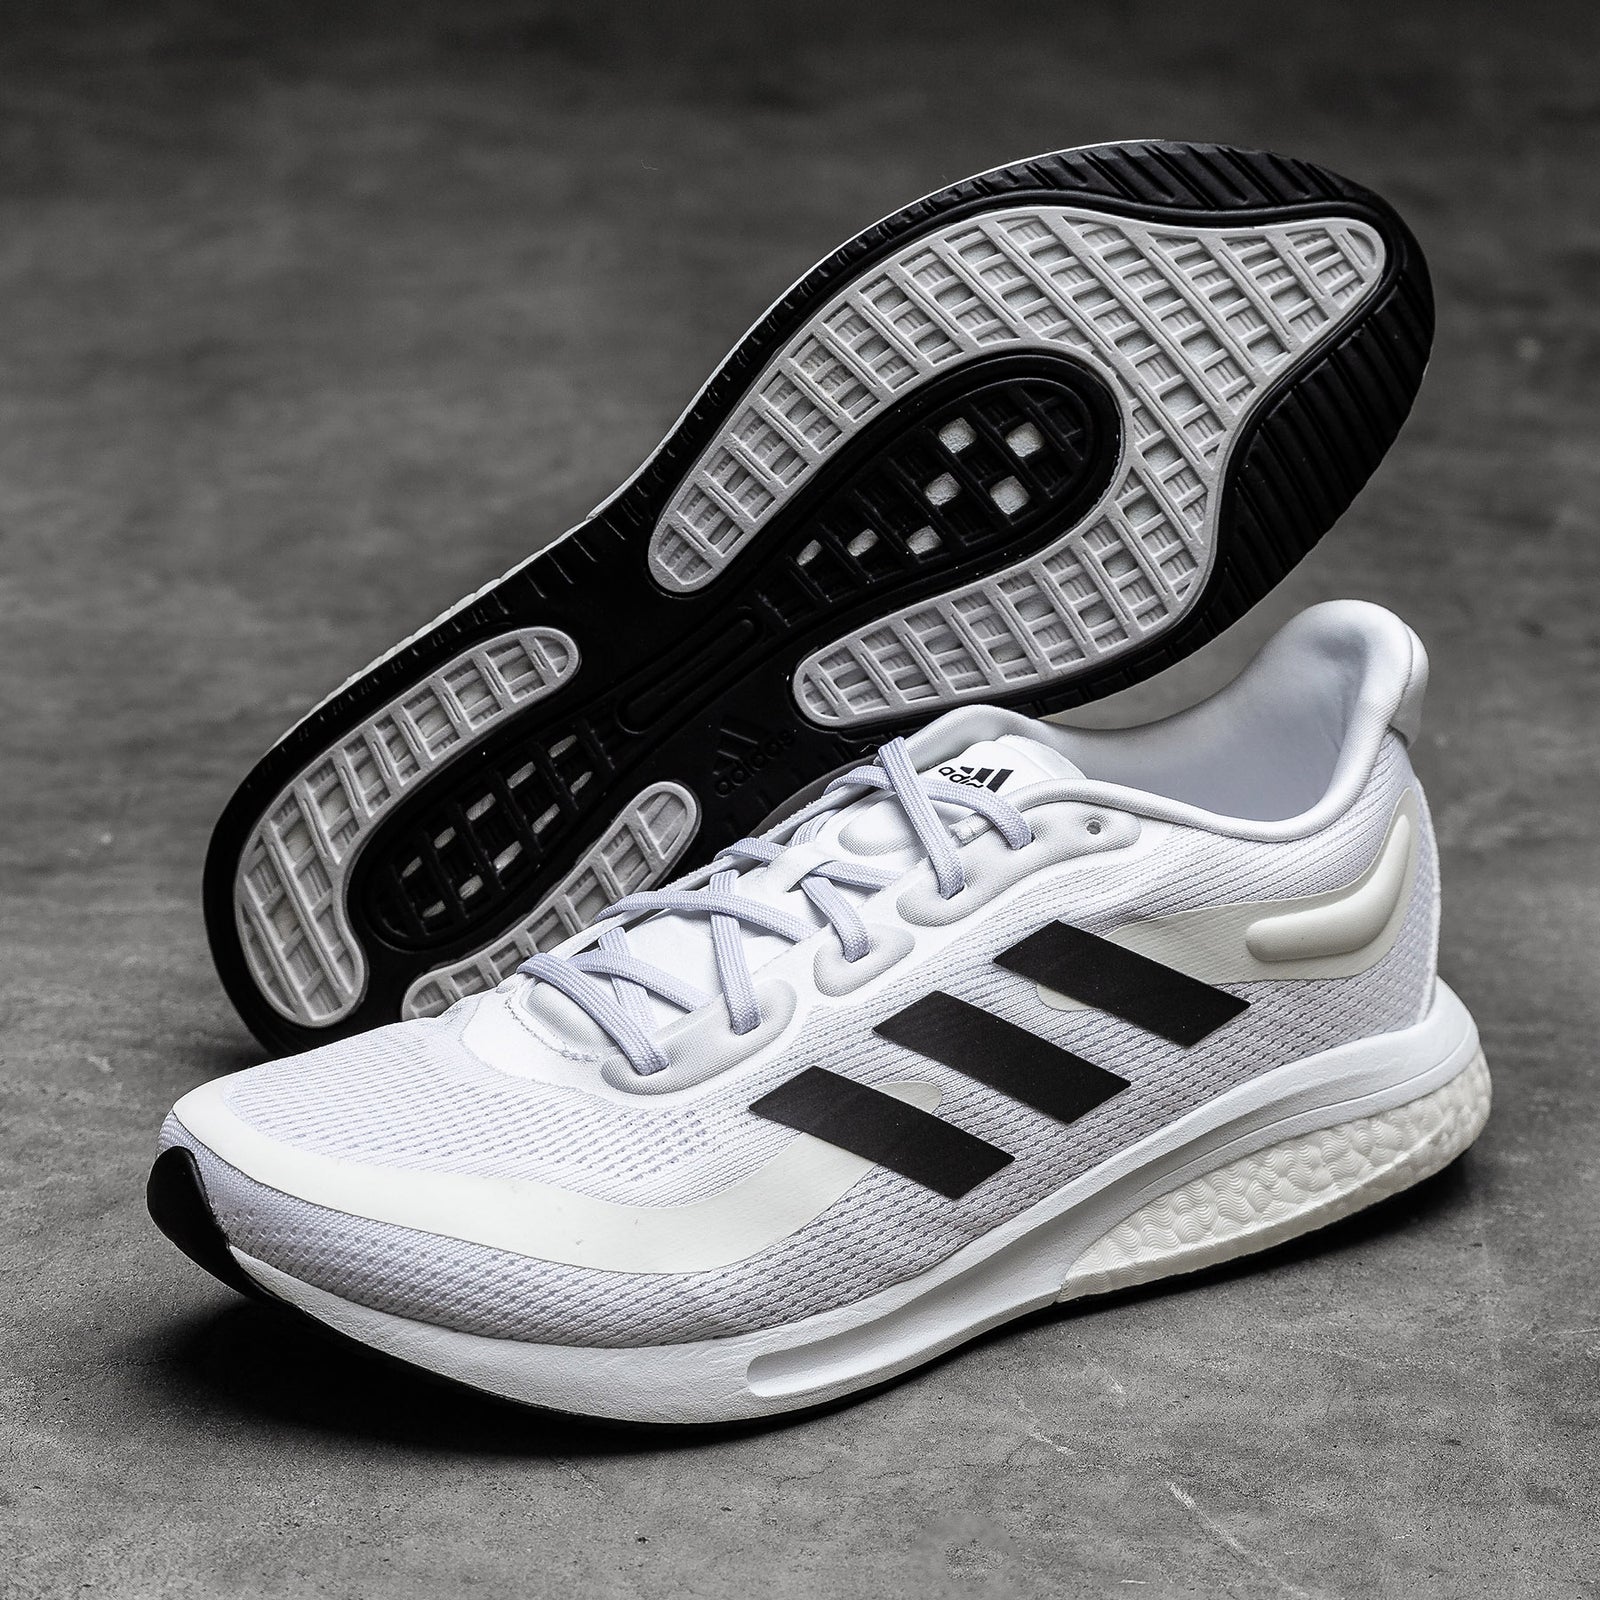 Buy Adidas Superstar White Splash Sneakers for Mens at